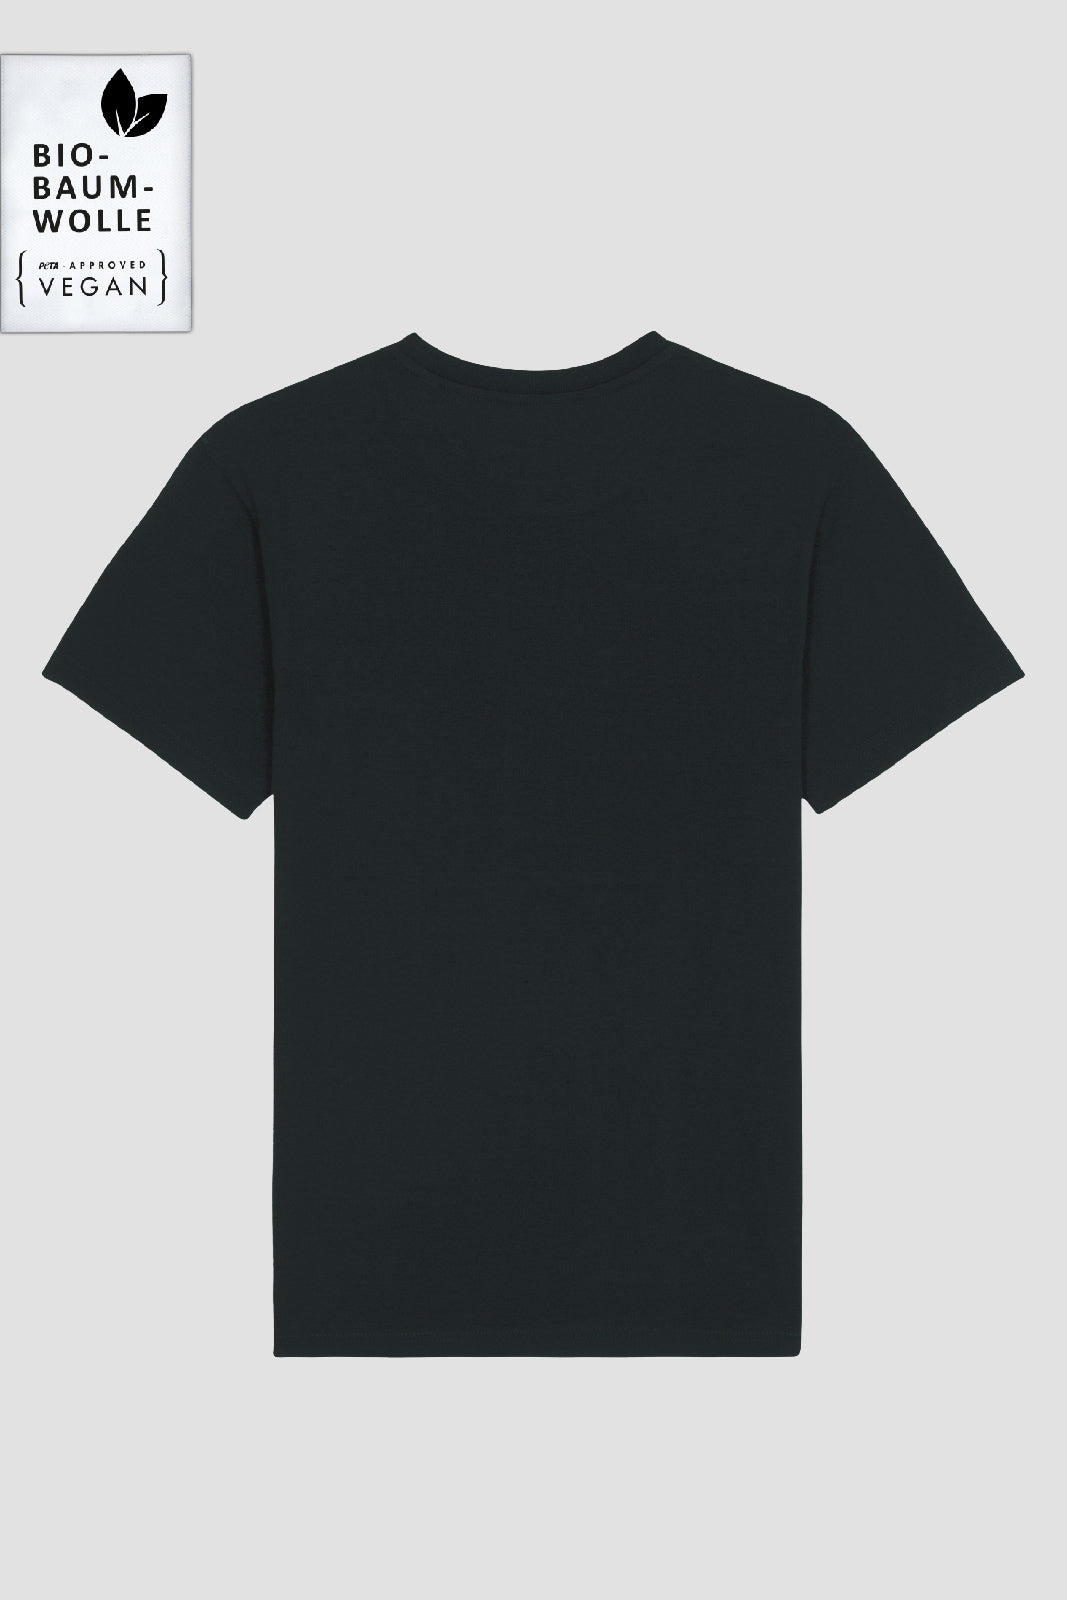 Kapuzenwurm T-Shirt "EMOTE" Black (Back)